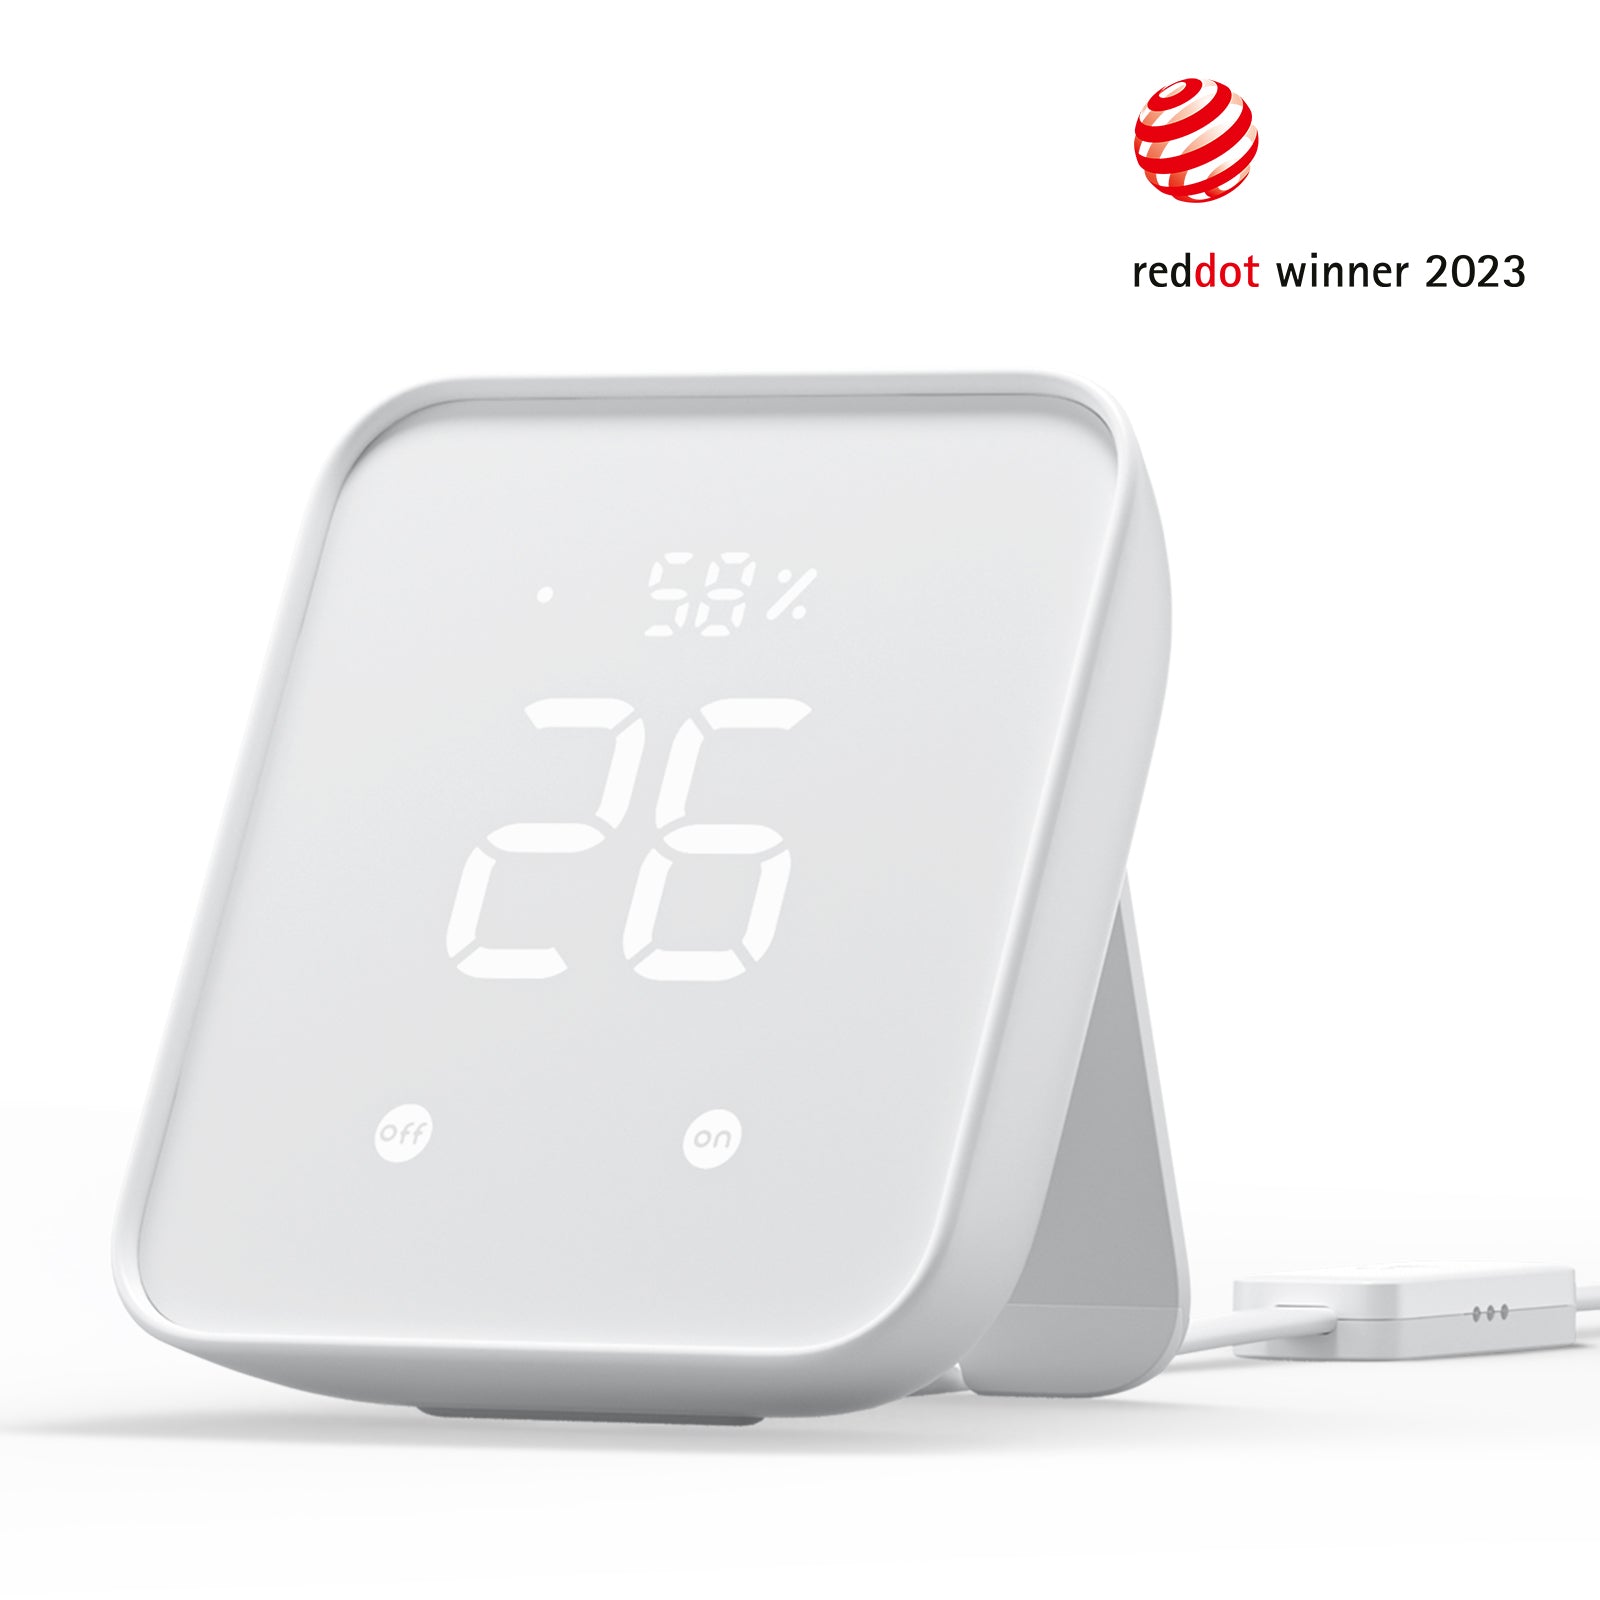 Outdoor meter, Le thermomètre ip65 de SwitchBot sur Jeedom